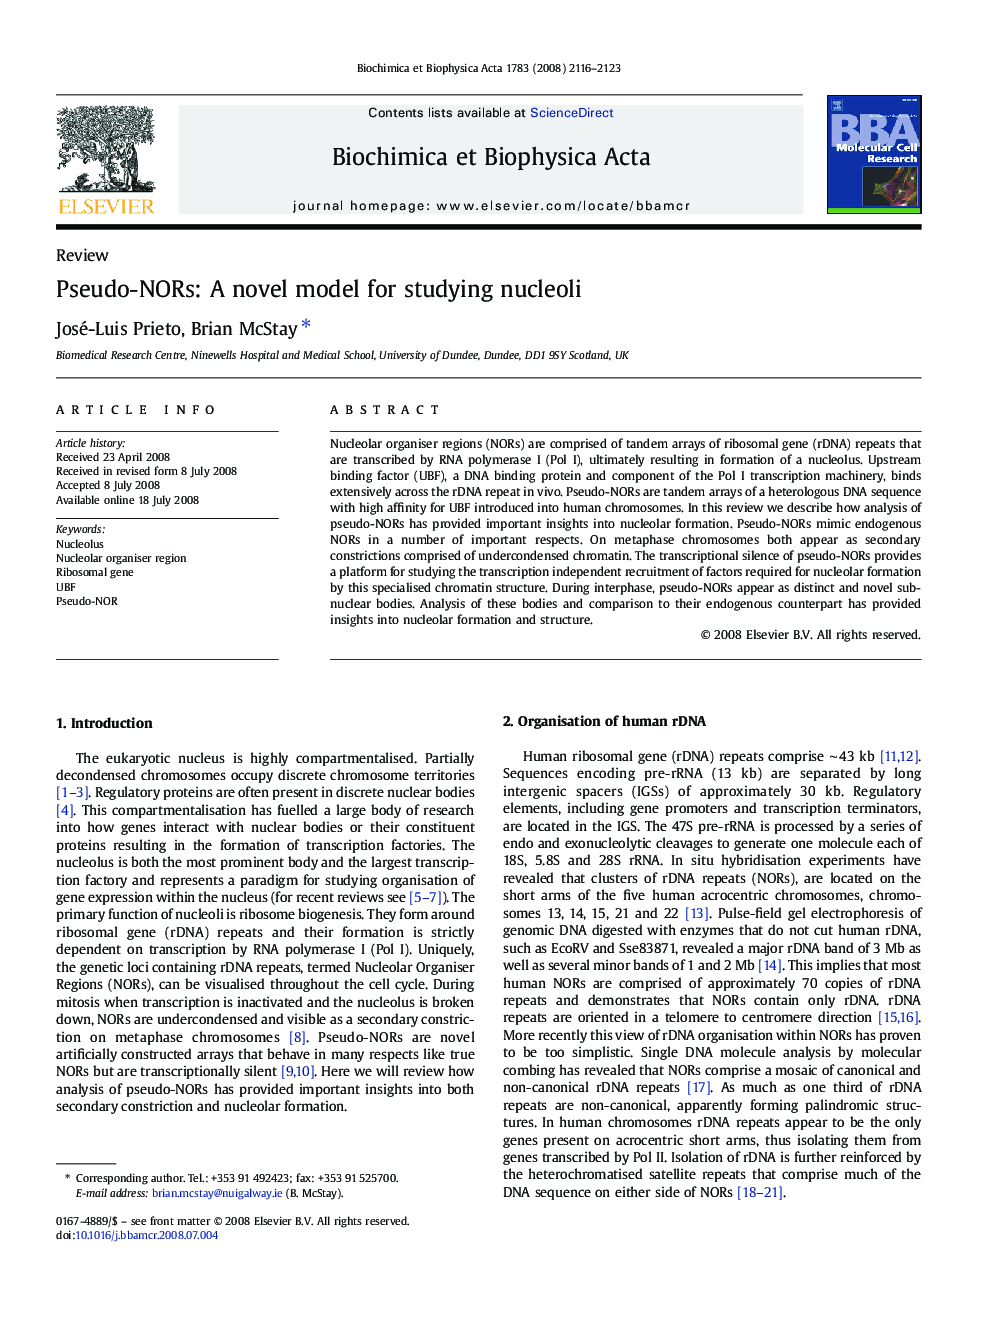 Pseudo-NORs: A novel model for studying nucleoli